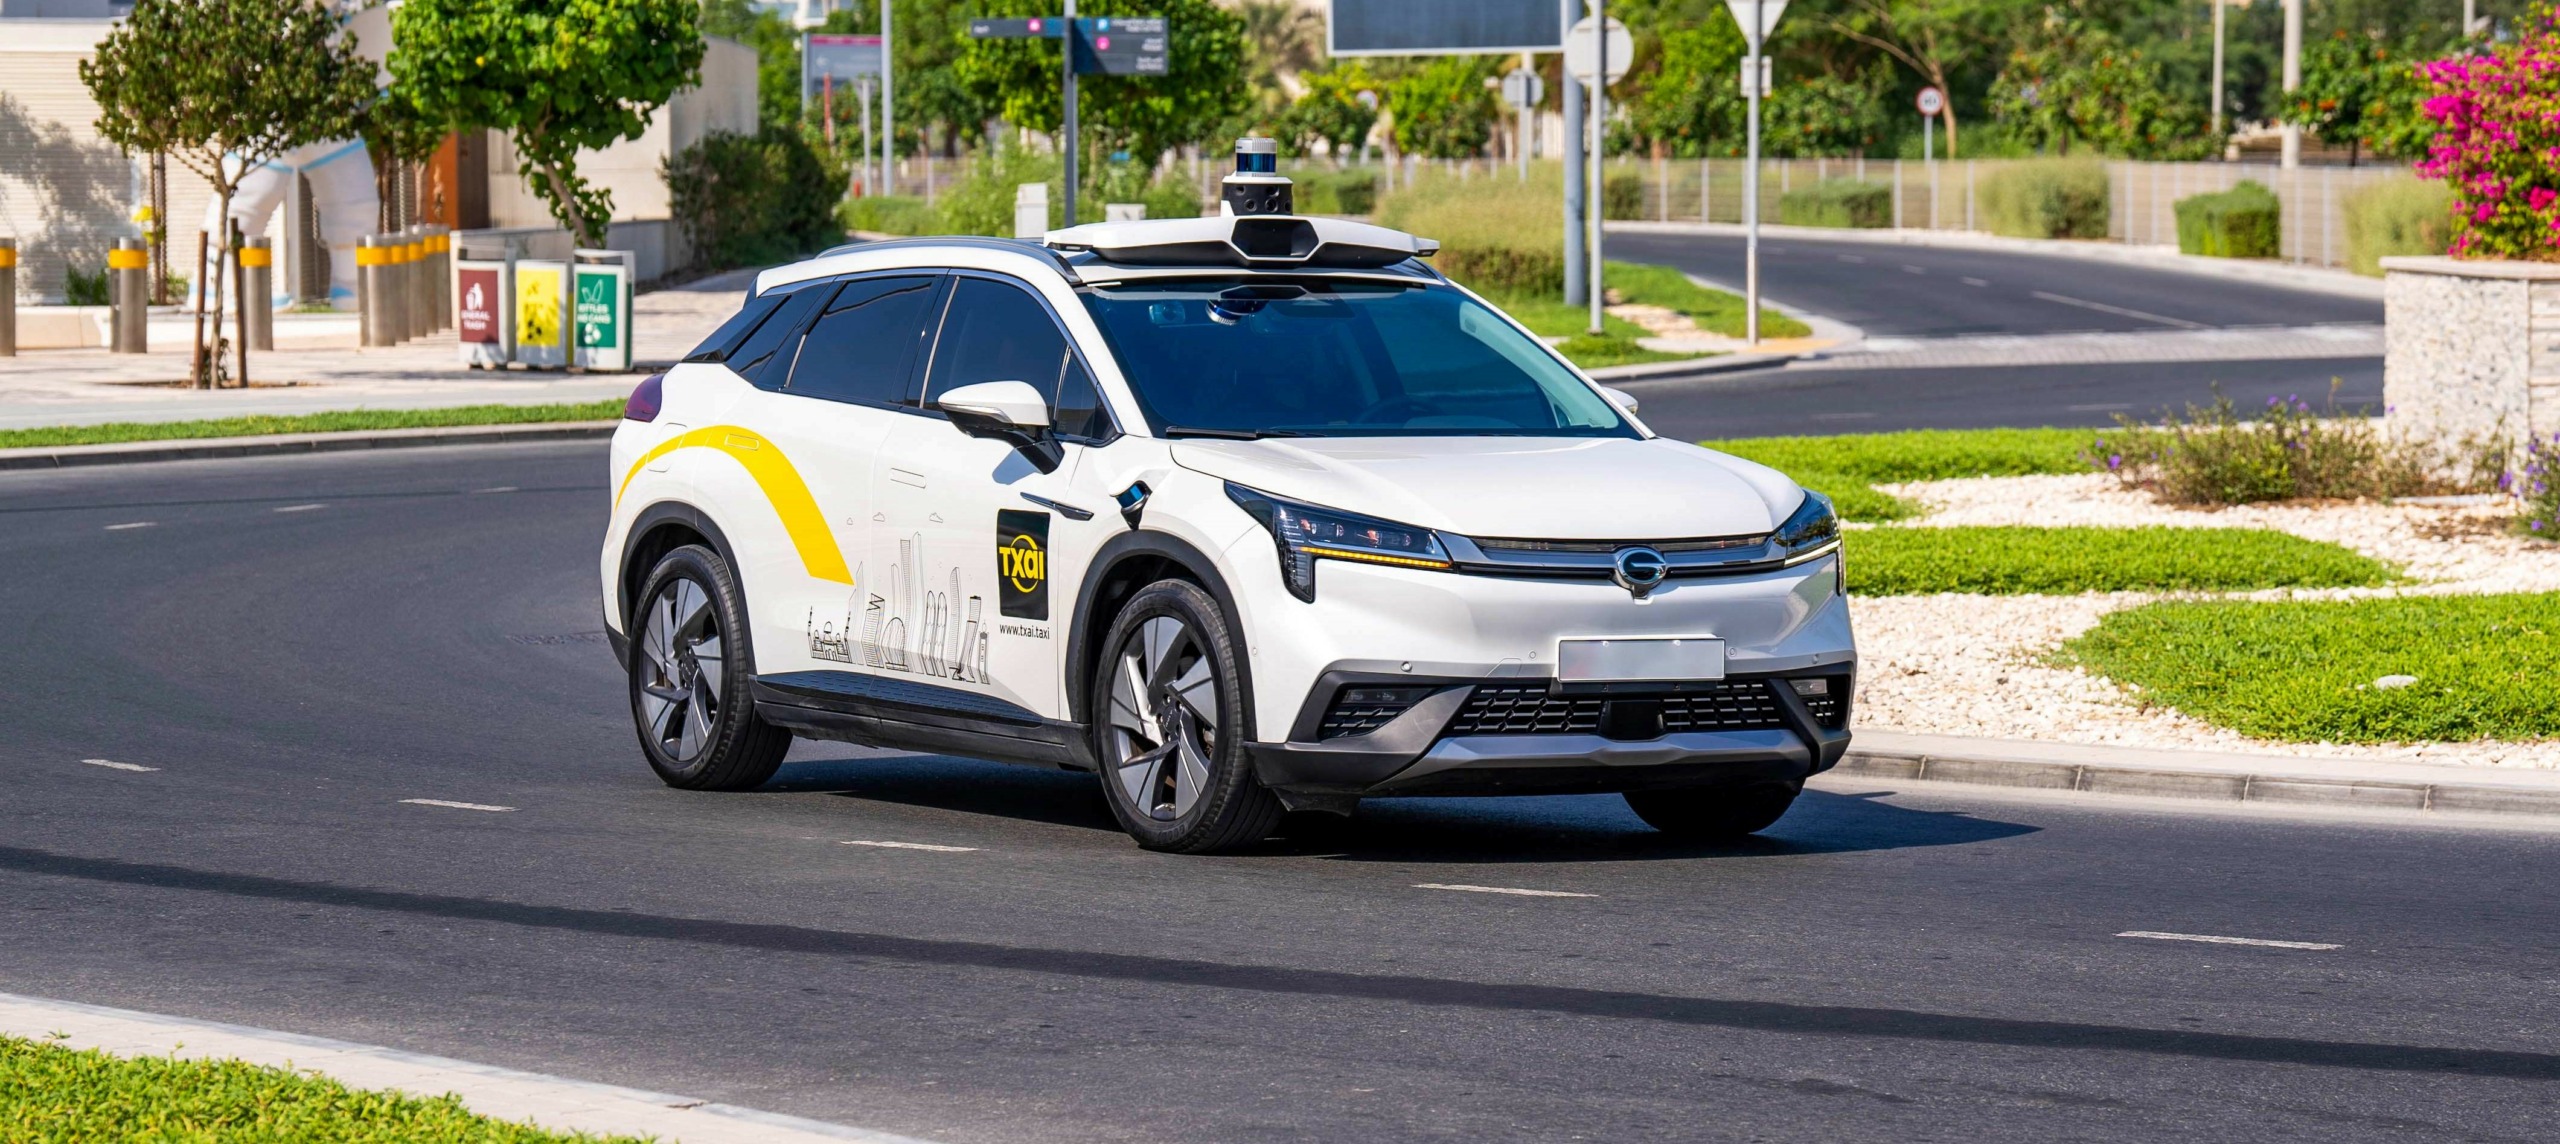 Bayanat Utilizes MENA Region’s First L4-enabled Autonomous Vehicles to Transport Visitors to DRIFTx